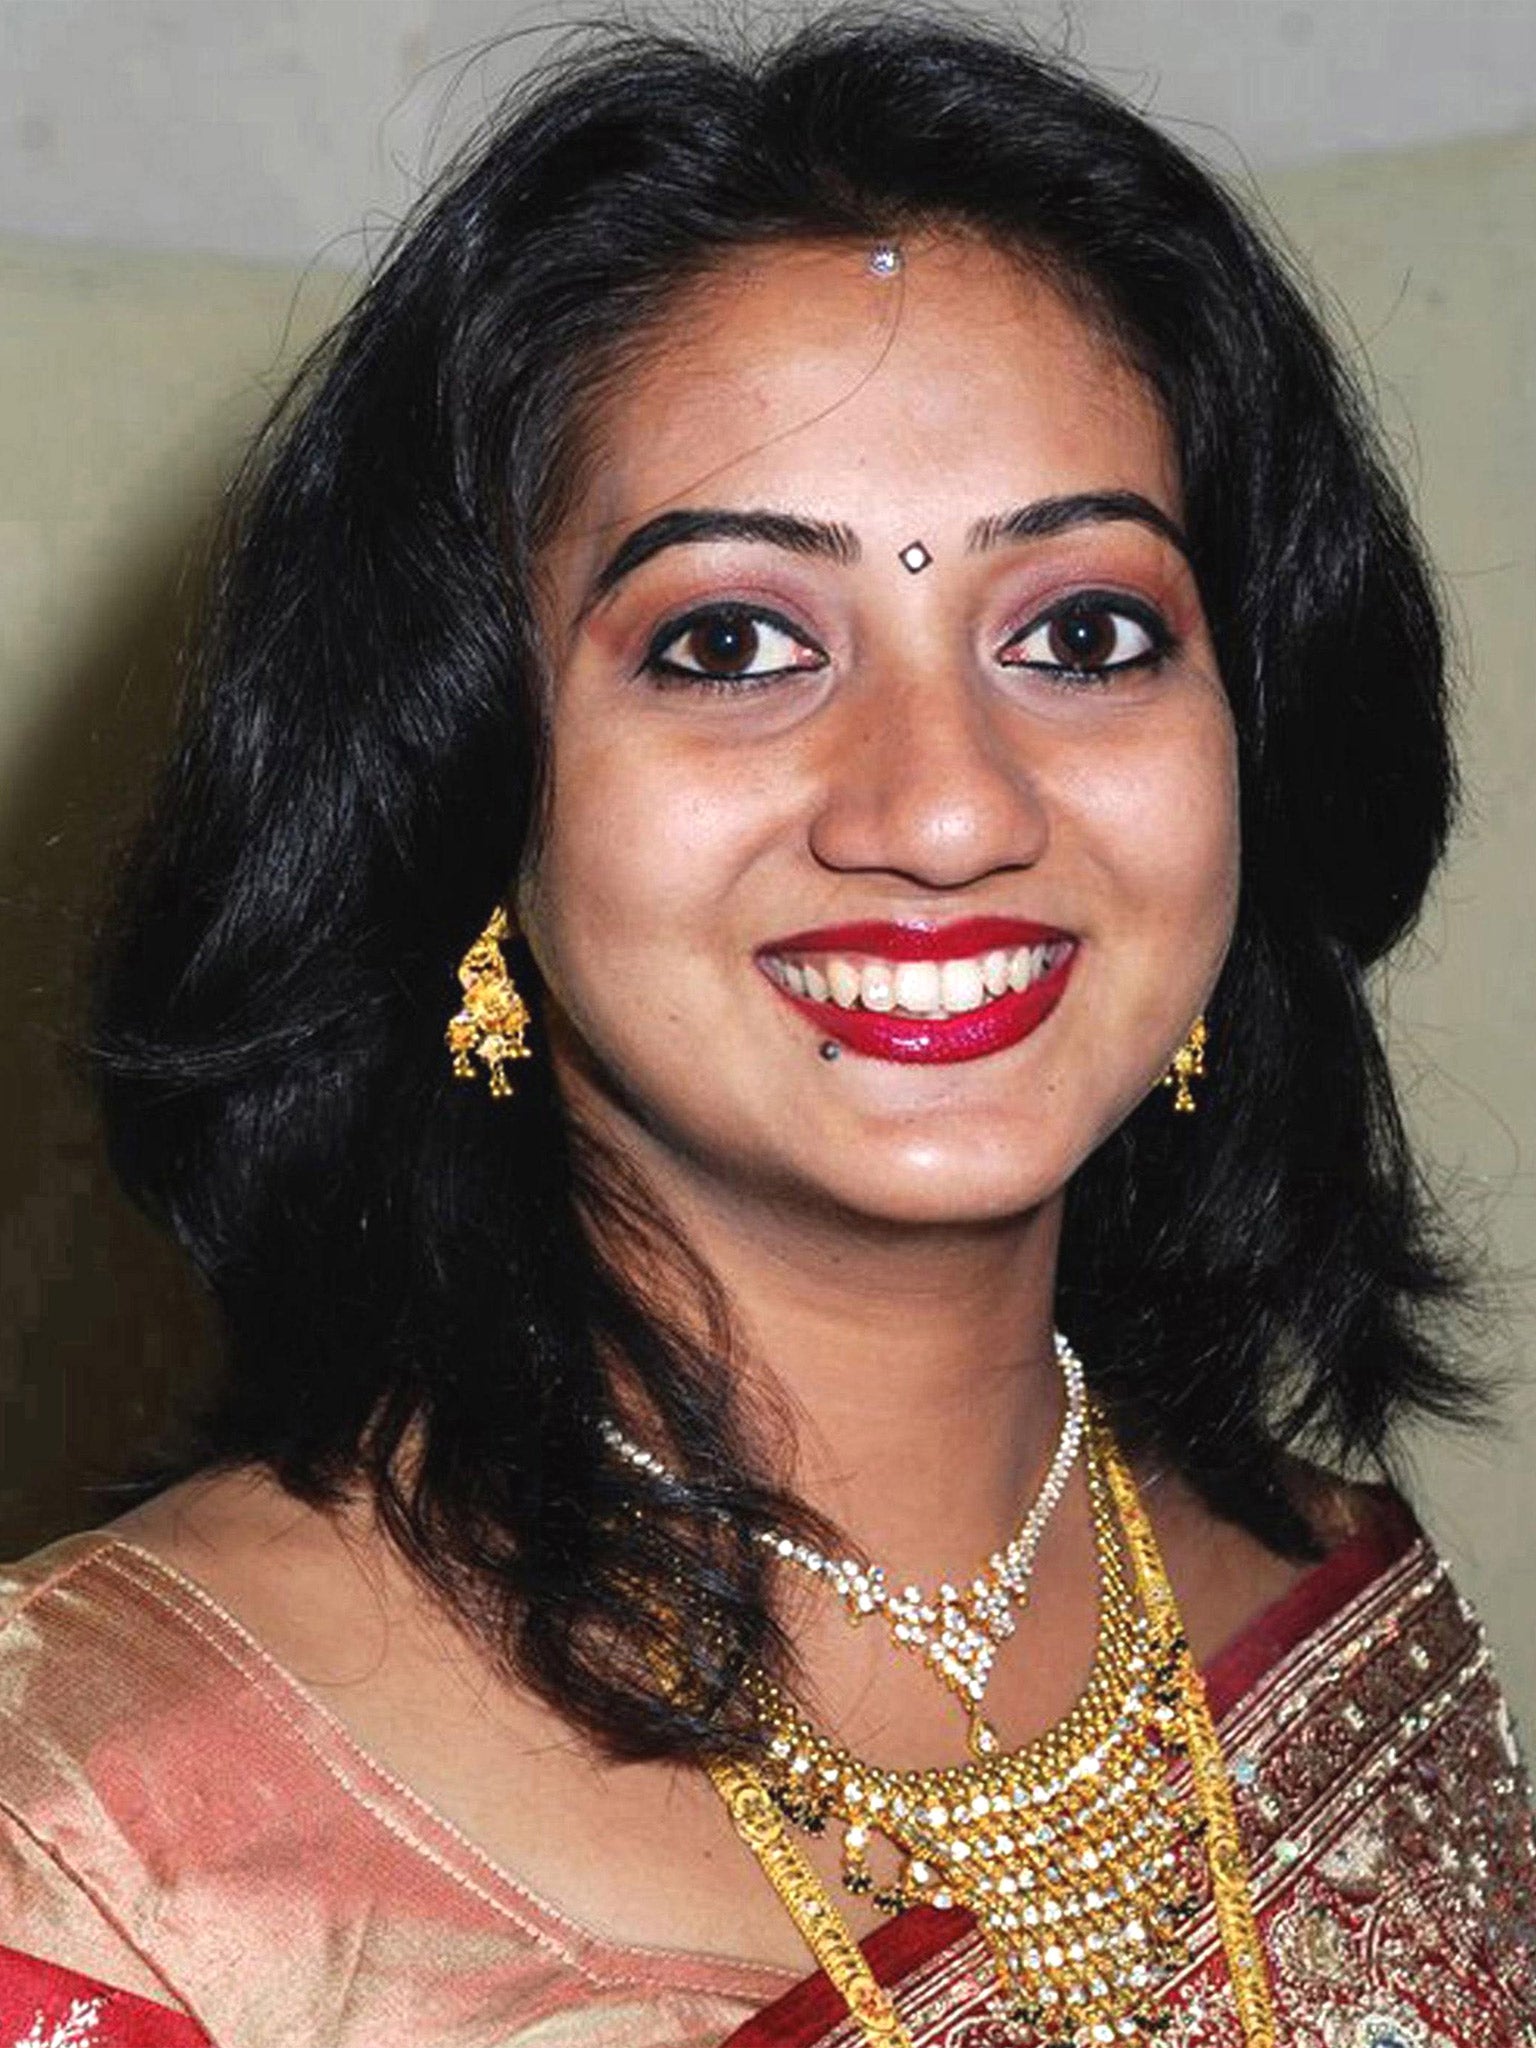 Savita Halappanavar died from septicaemia and a rare strain of E.coli